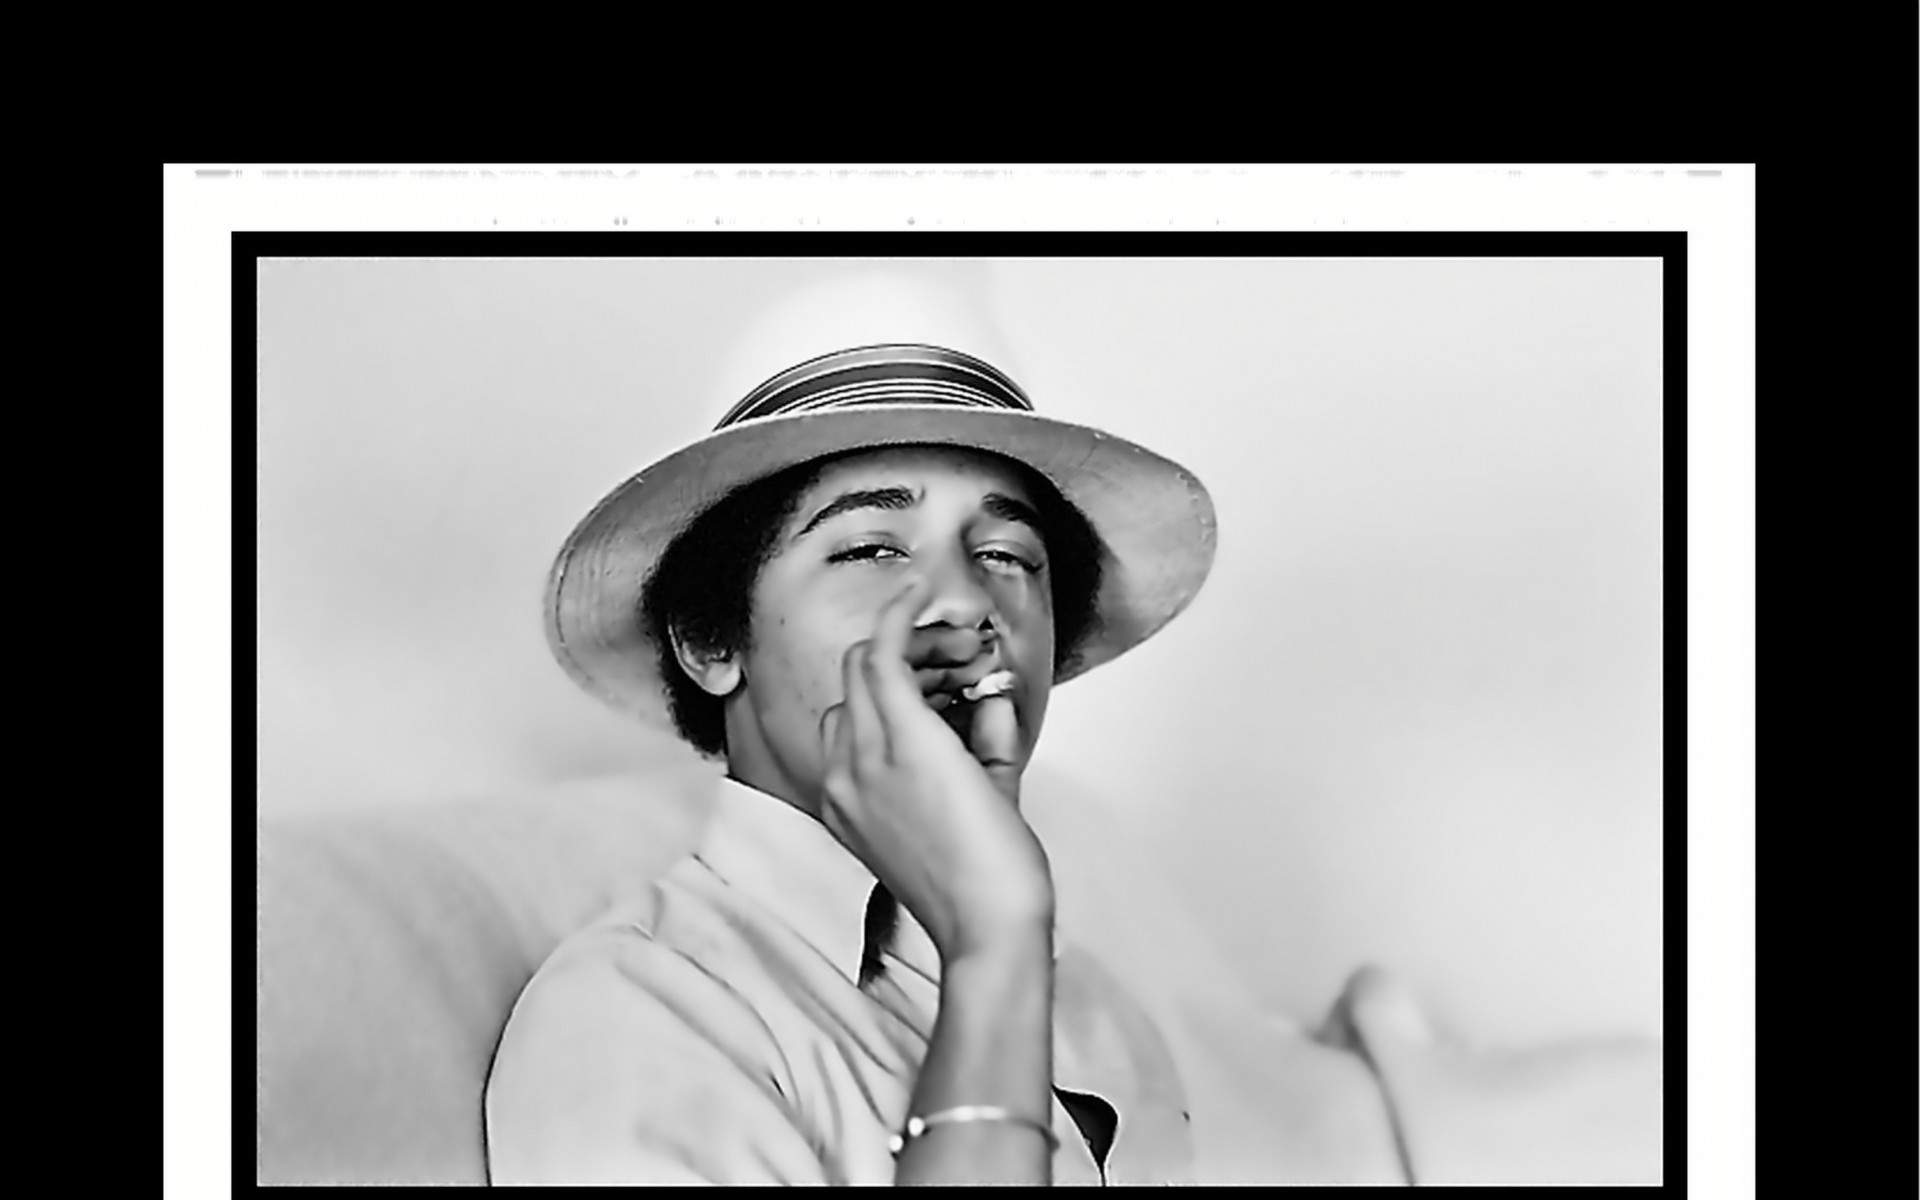 Young Marijuana Barack Obama Portraits Art Hd Wallpaper - Funny 2 Week Notice Meme - HD Wallpaper 